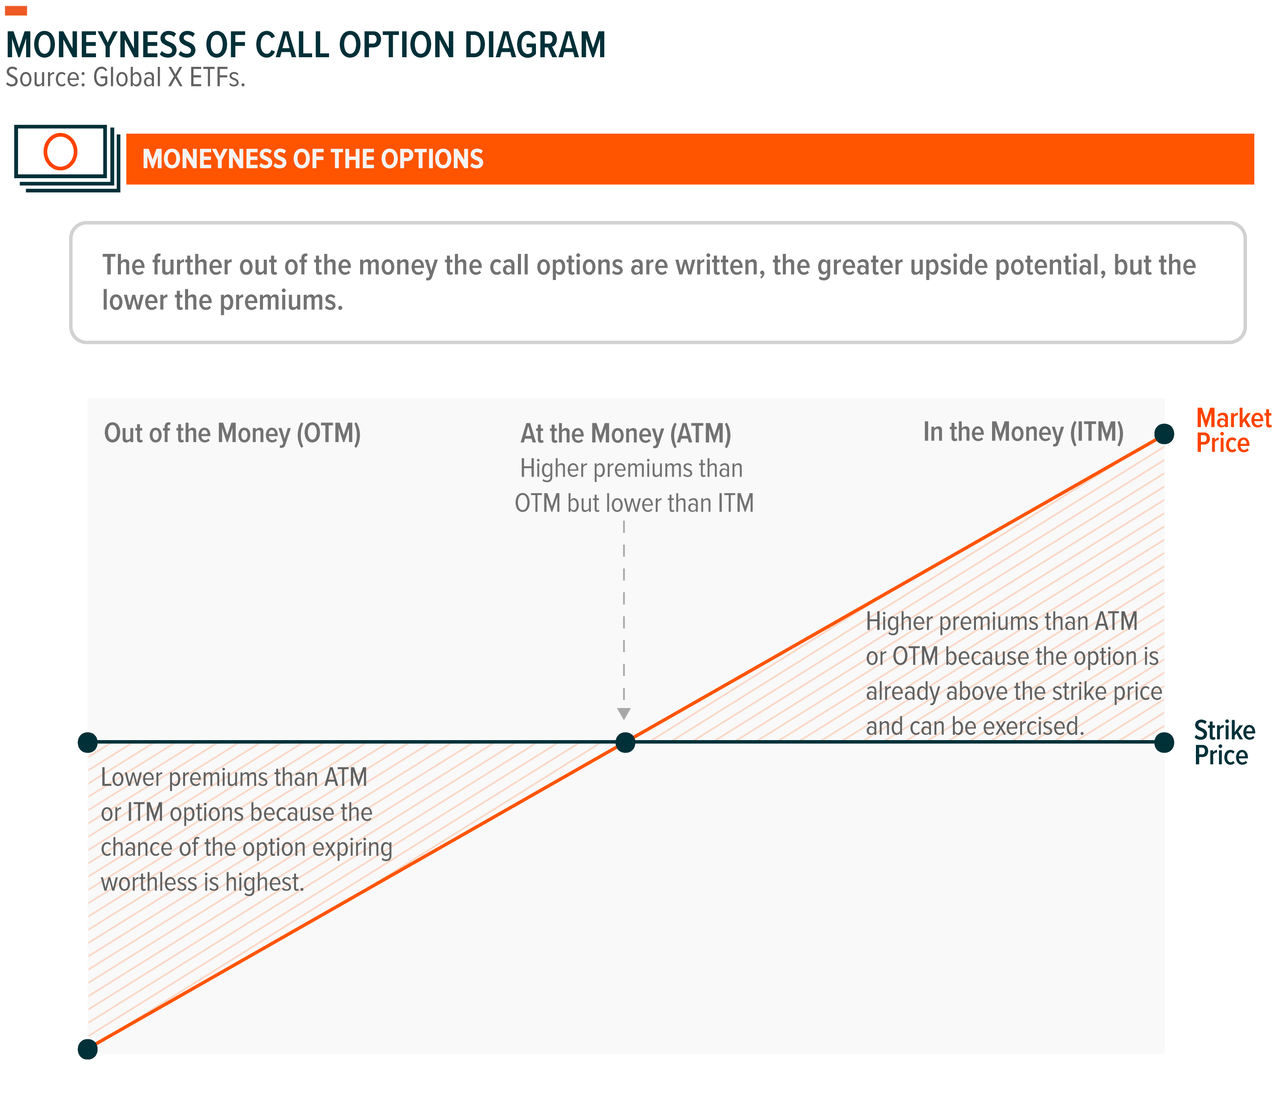 Moneyness of Call Option Diagram